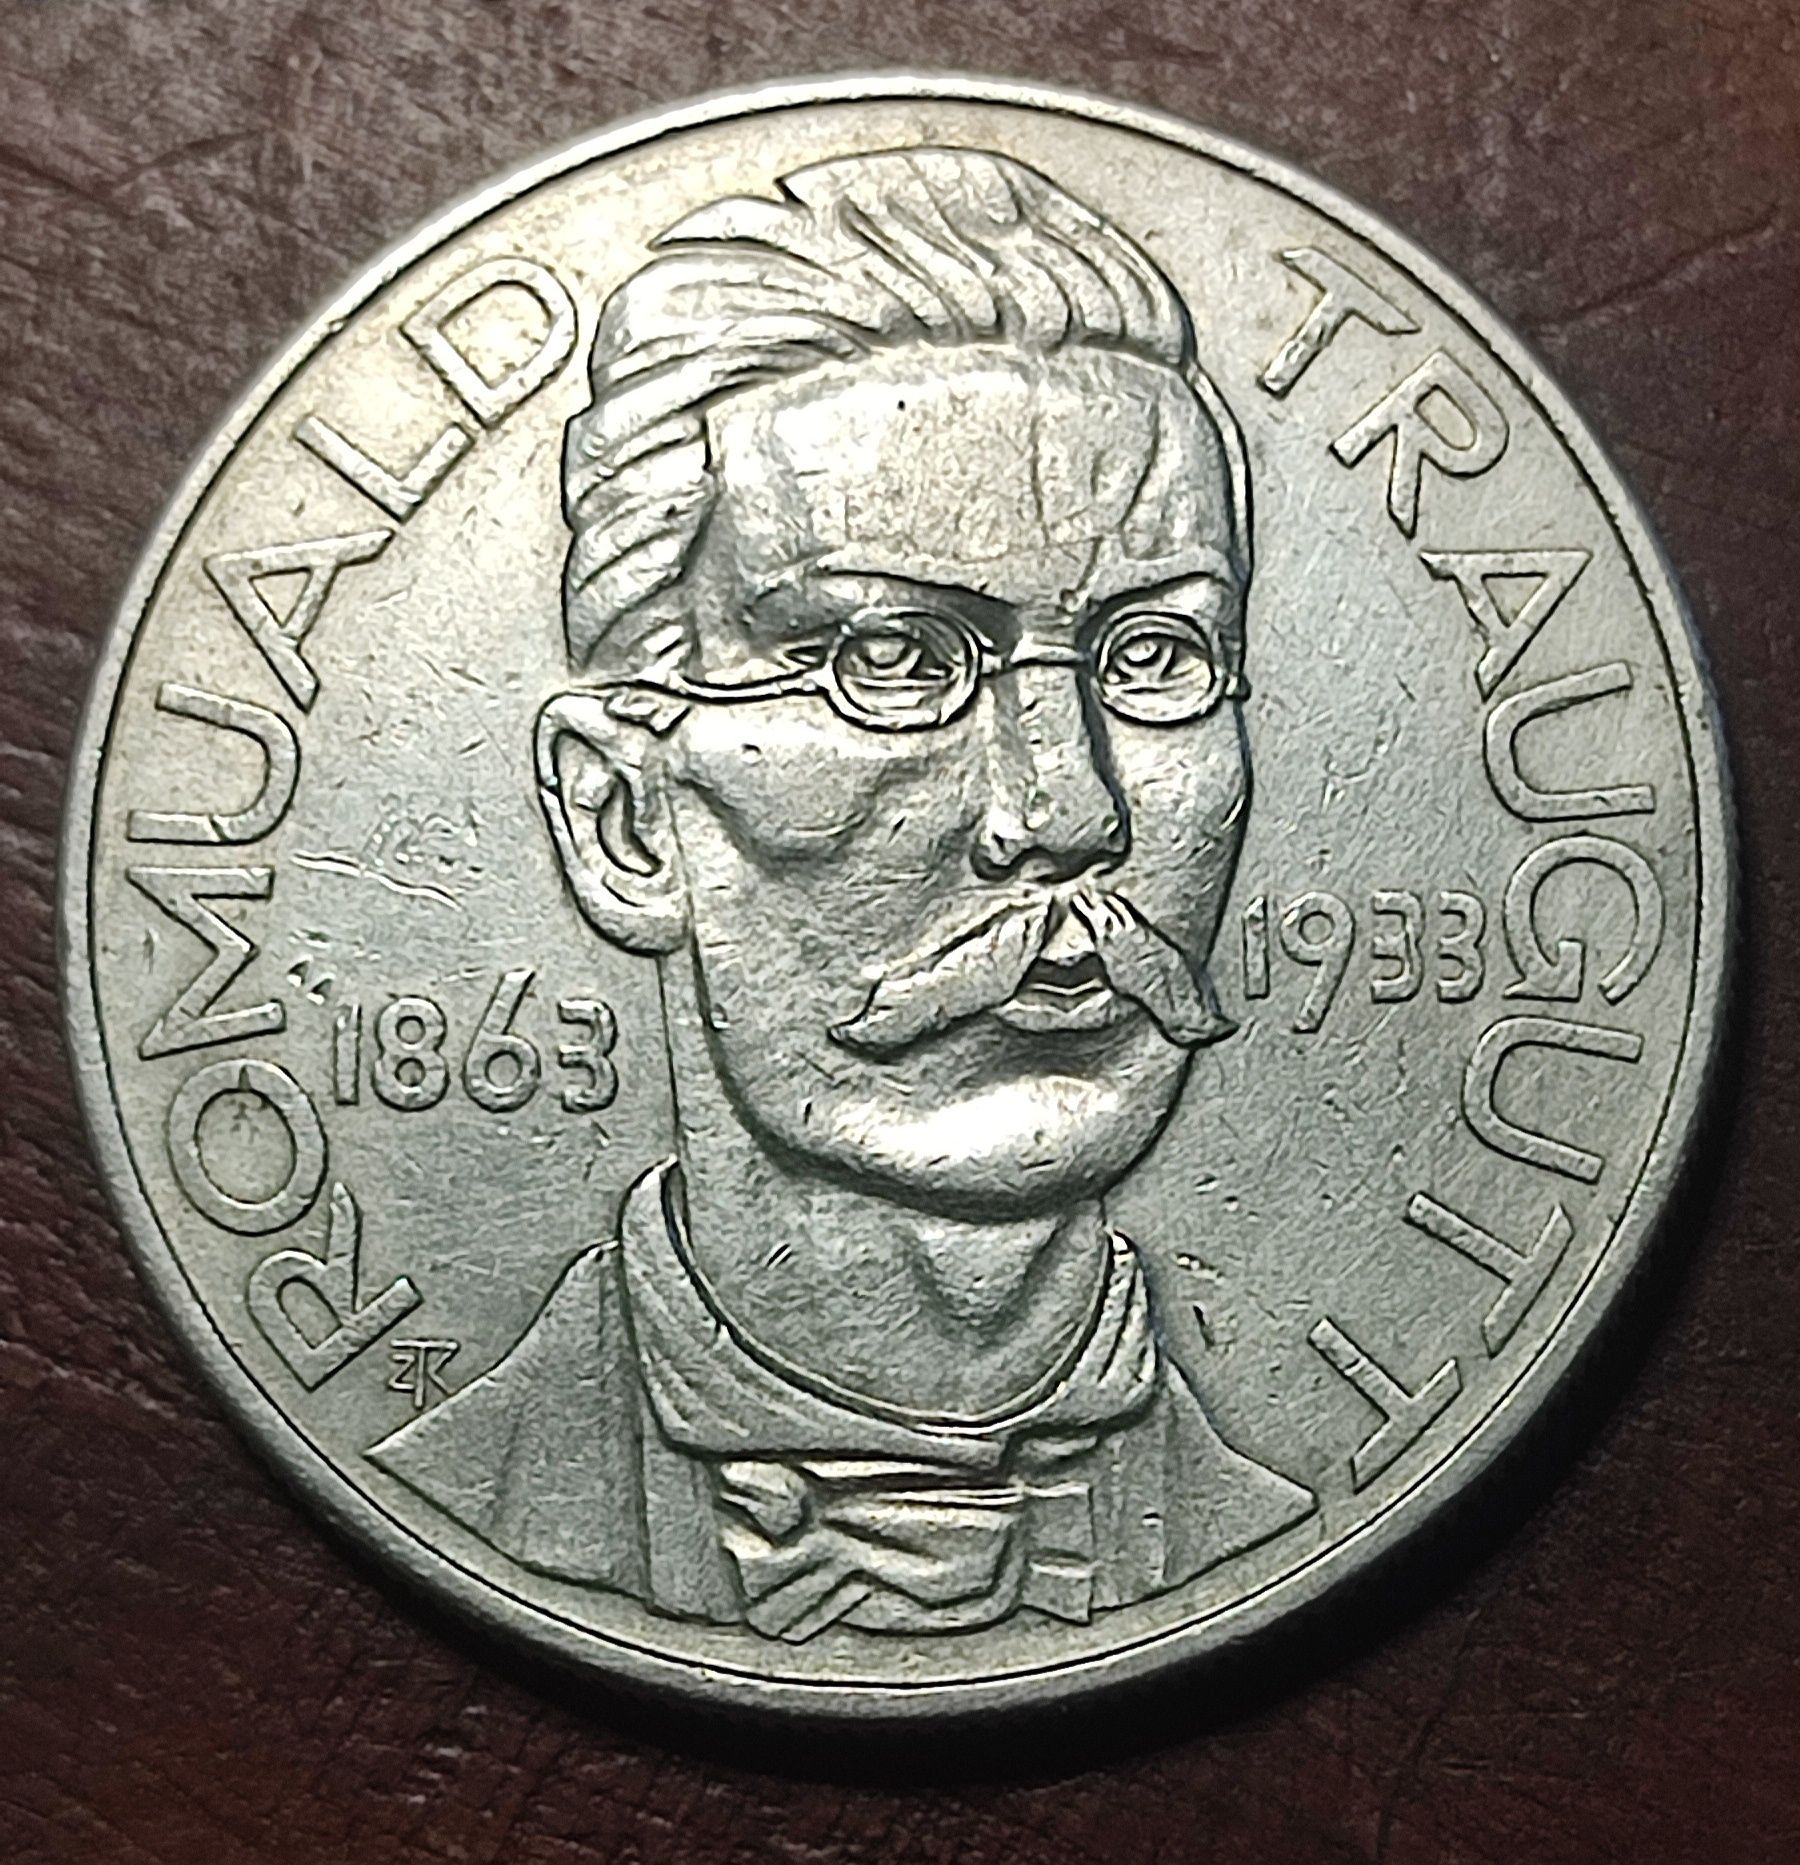 10 zł 1933r Romuald Traugutt - srebro, oryginał.